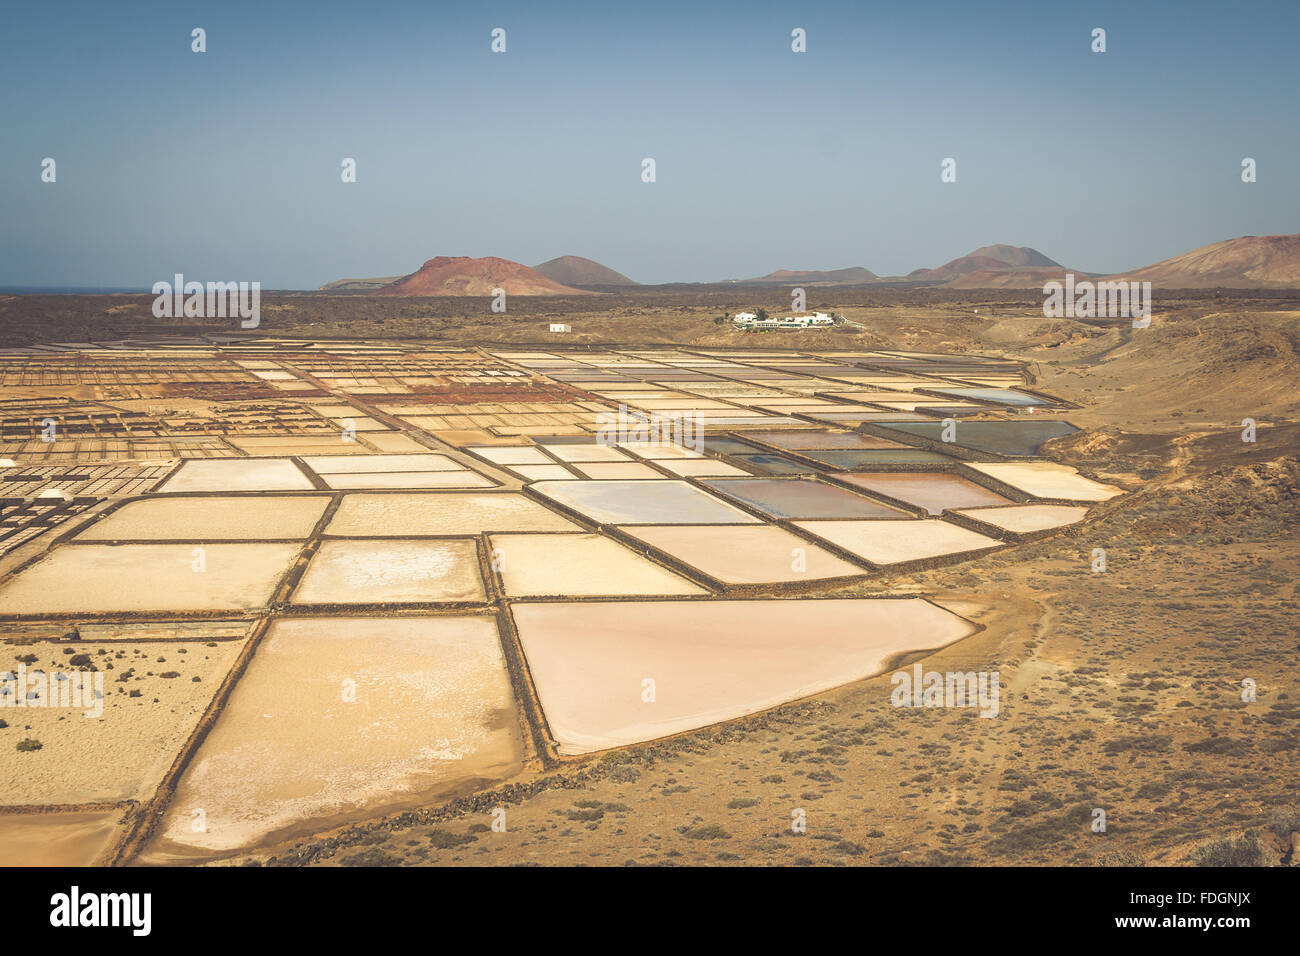 Salt works of Janubio, Lanzarote, Canary Islands Stock Photo